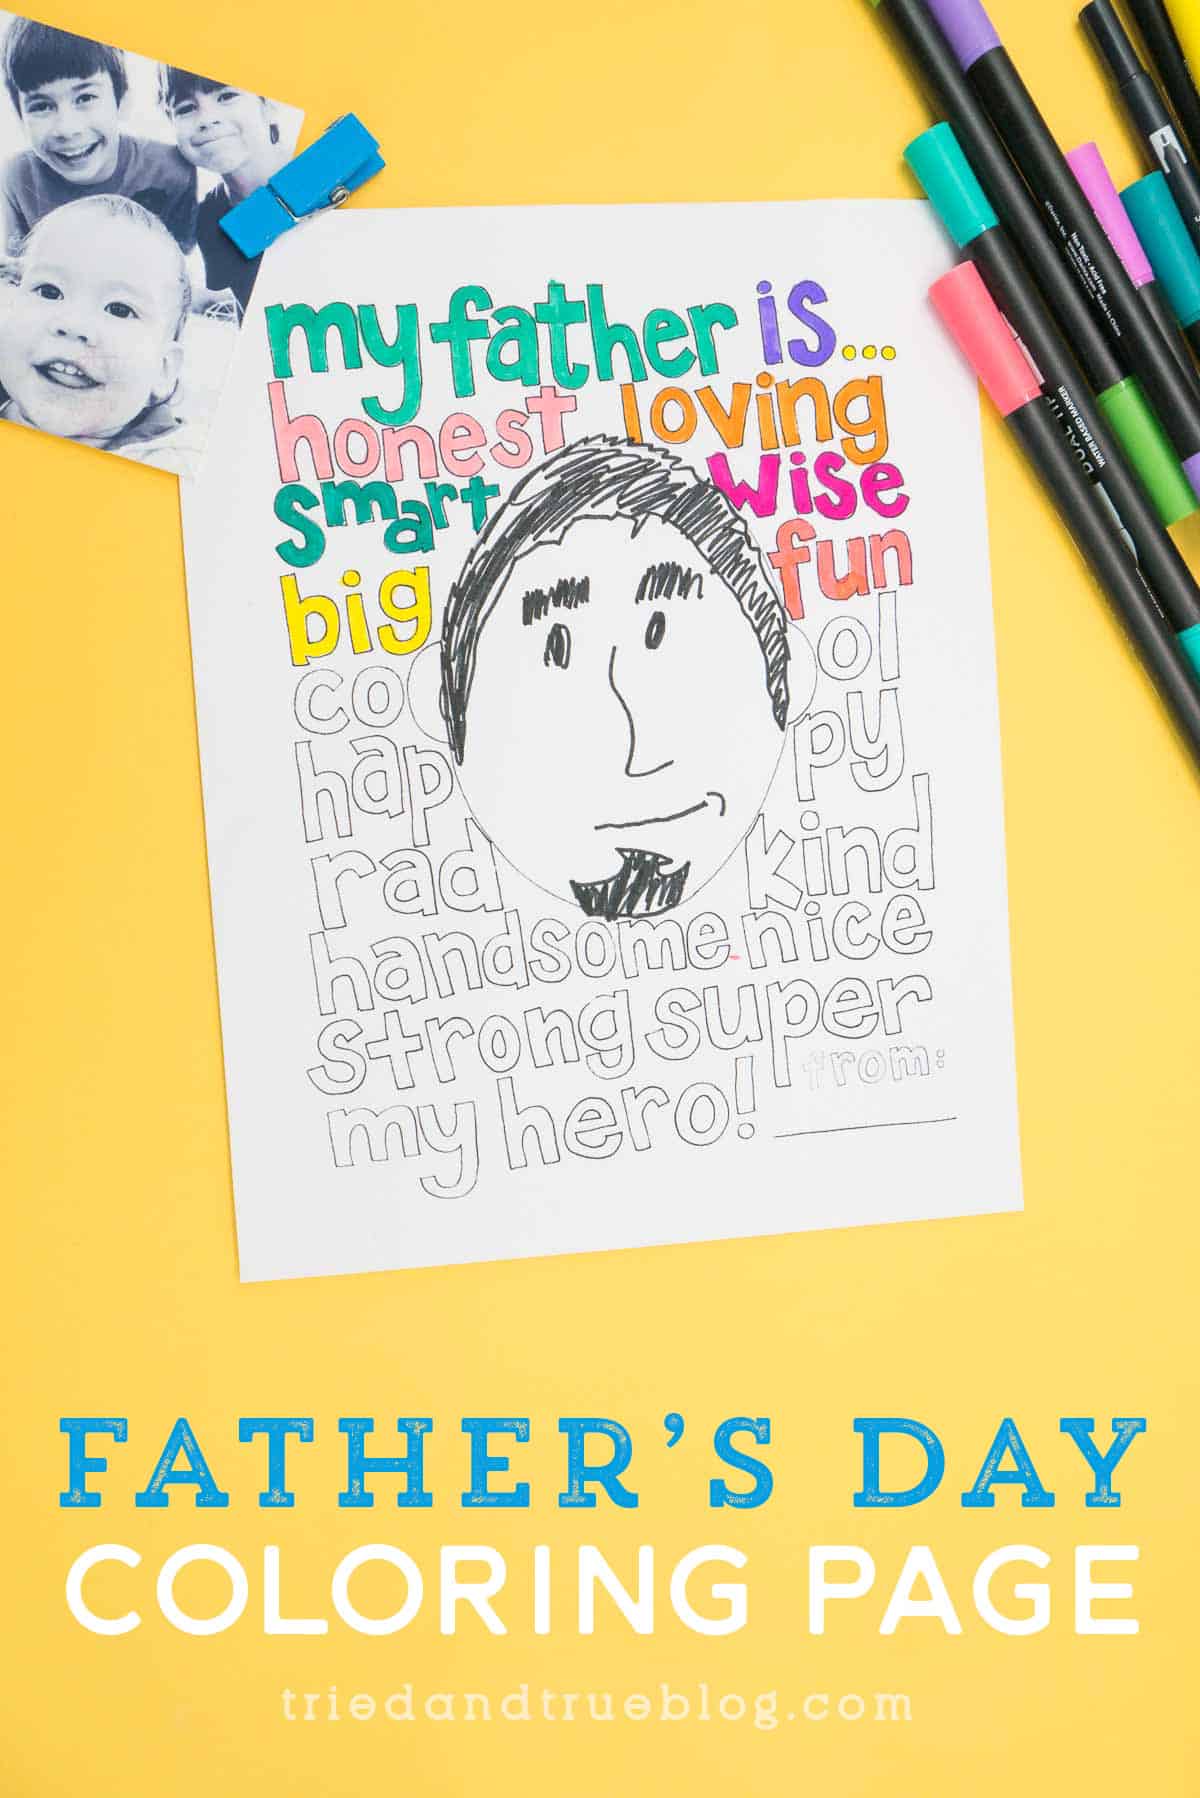 https://www.triedandtrueblog.com/triedandtrue/wp-content/uploads/2014/06/Fathers-Day-Coloring-Page-EDIT04.jpg